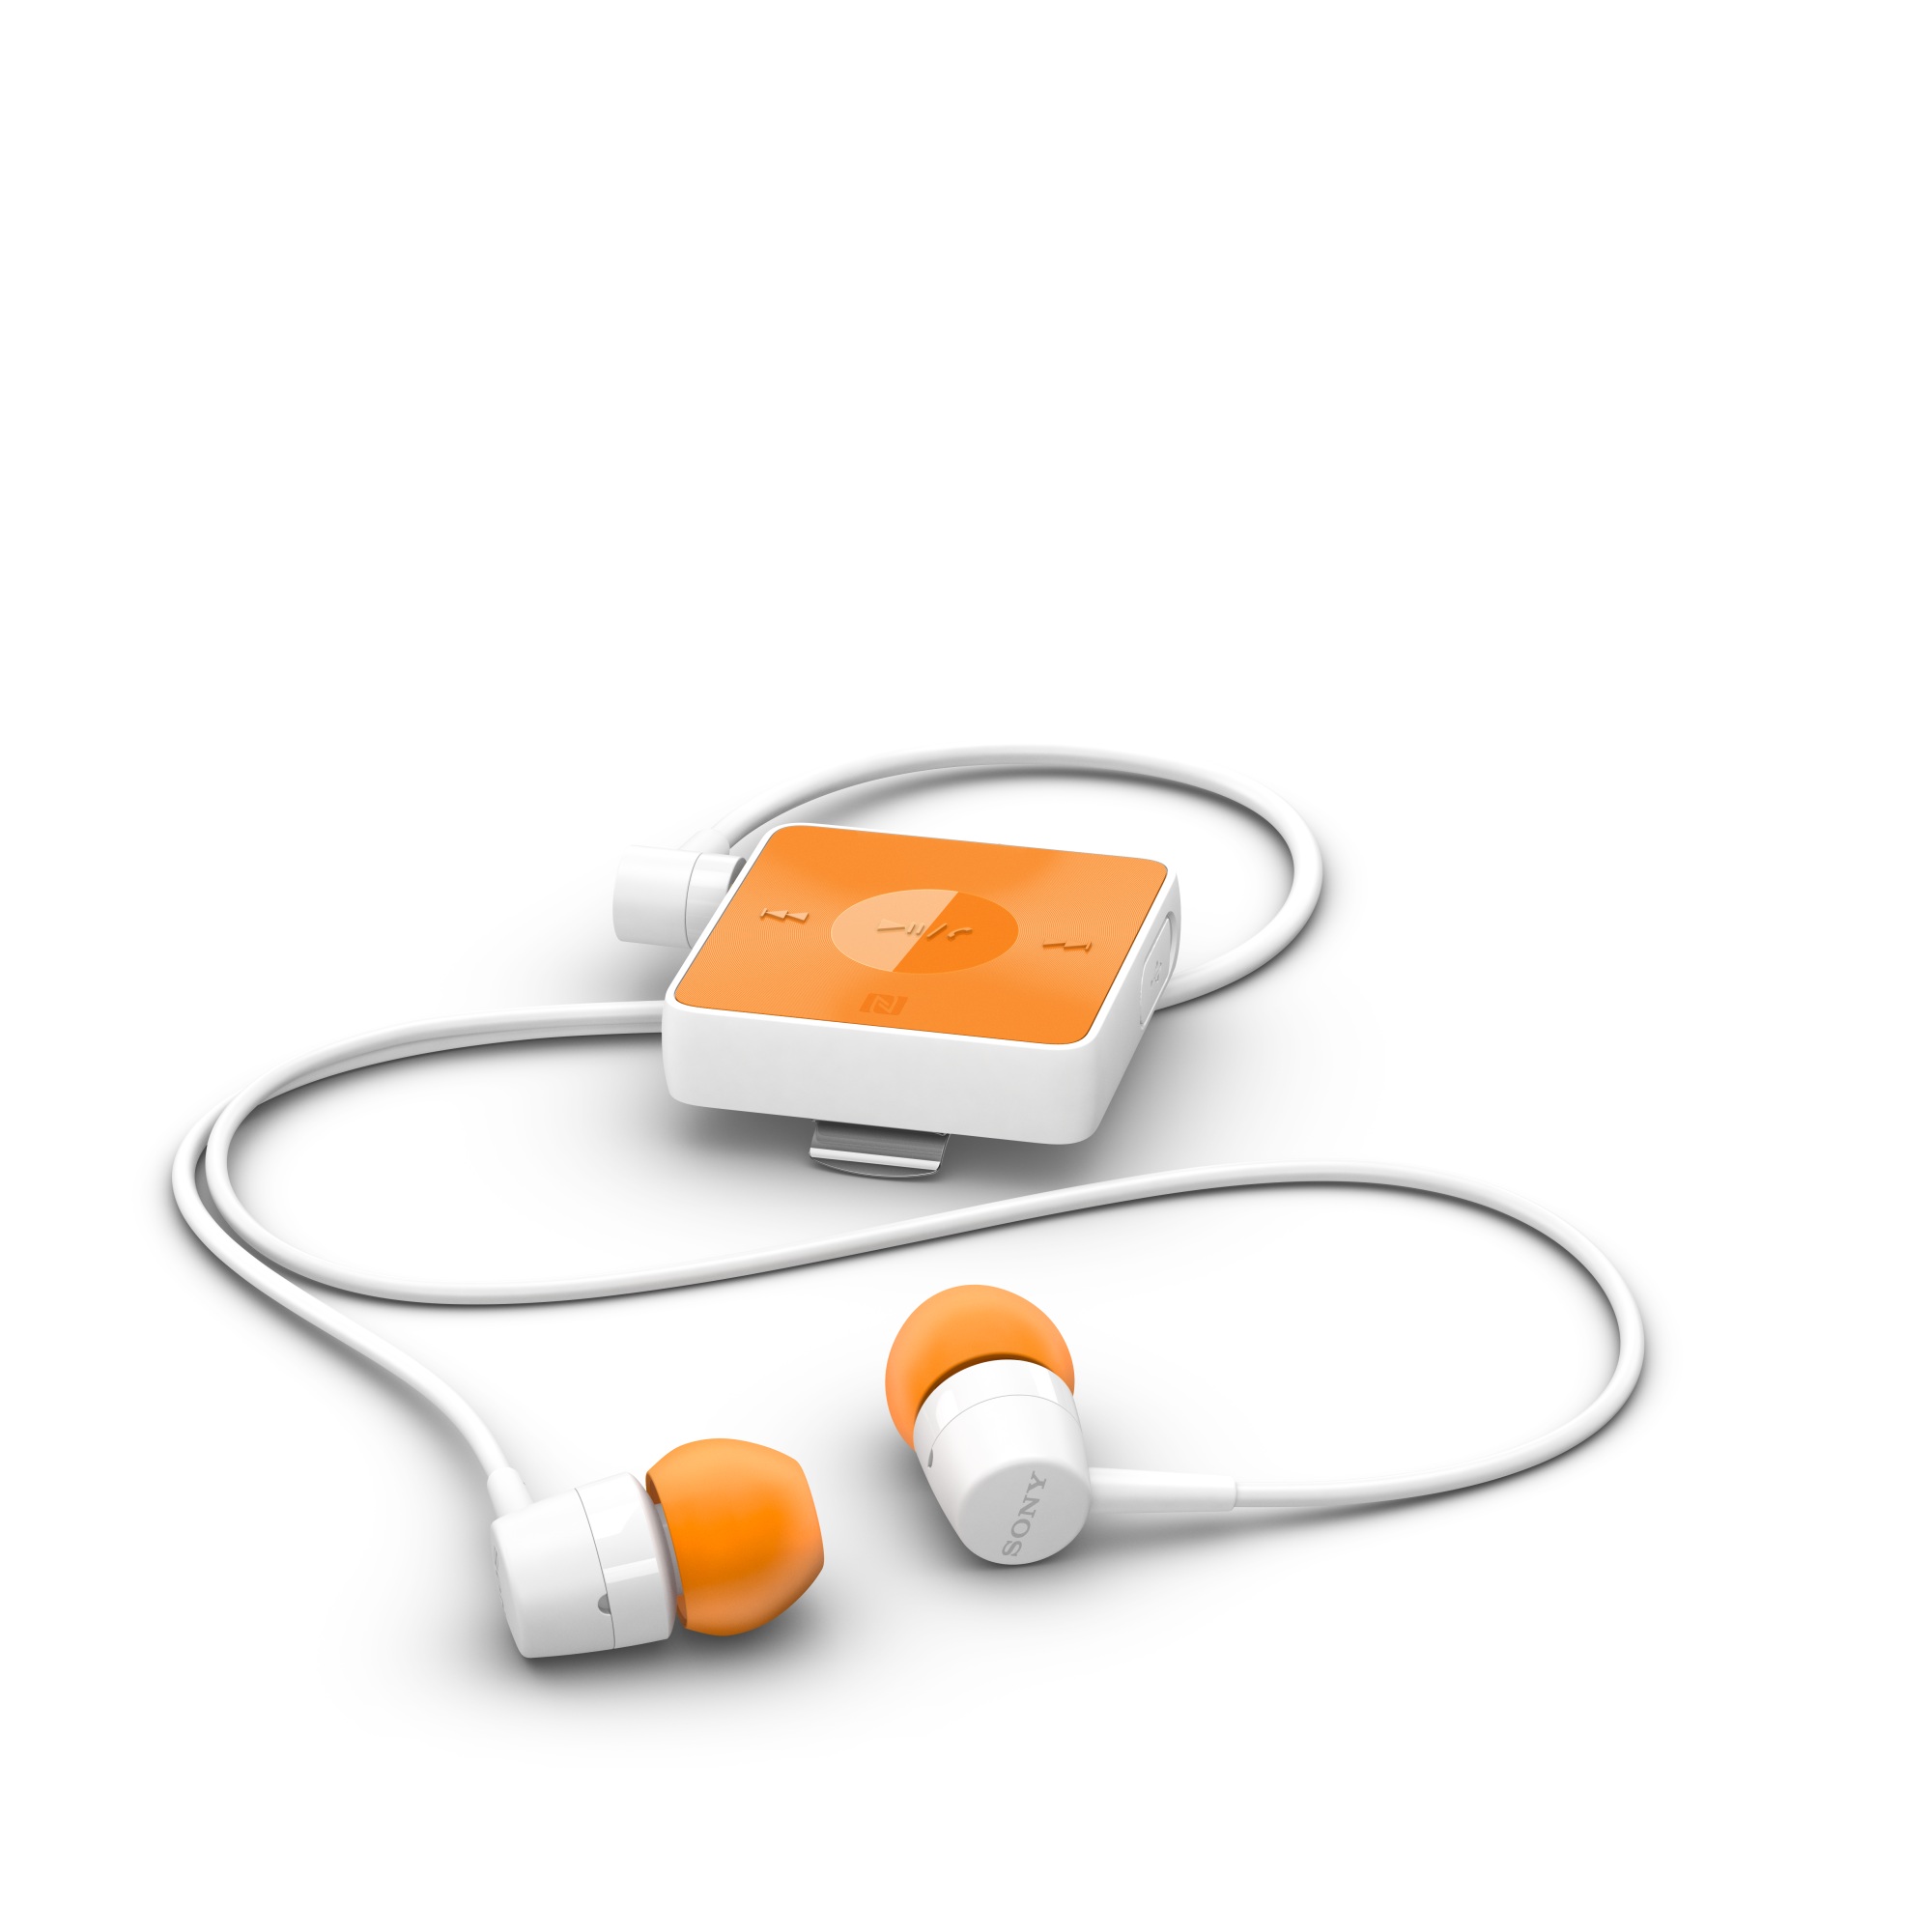 Oreillette Bluetooth Sony SBH20 Orange					